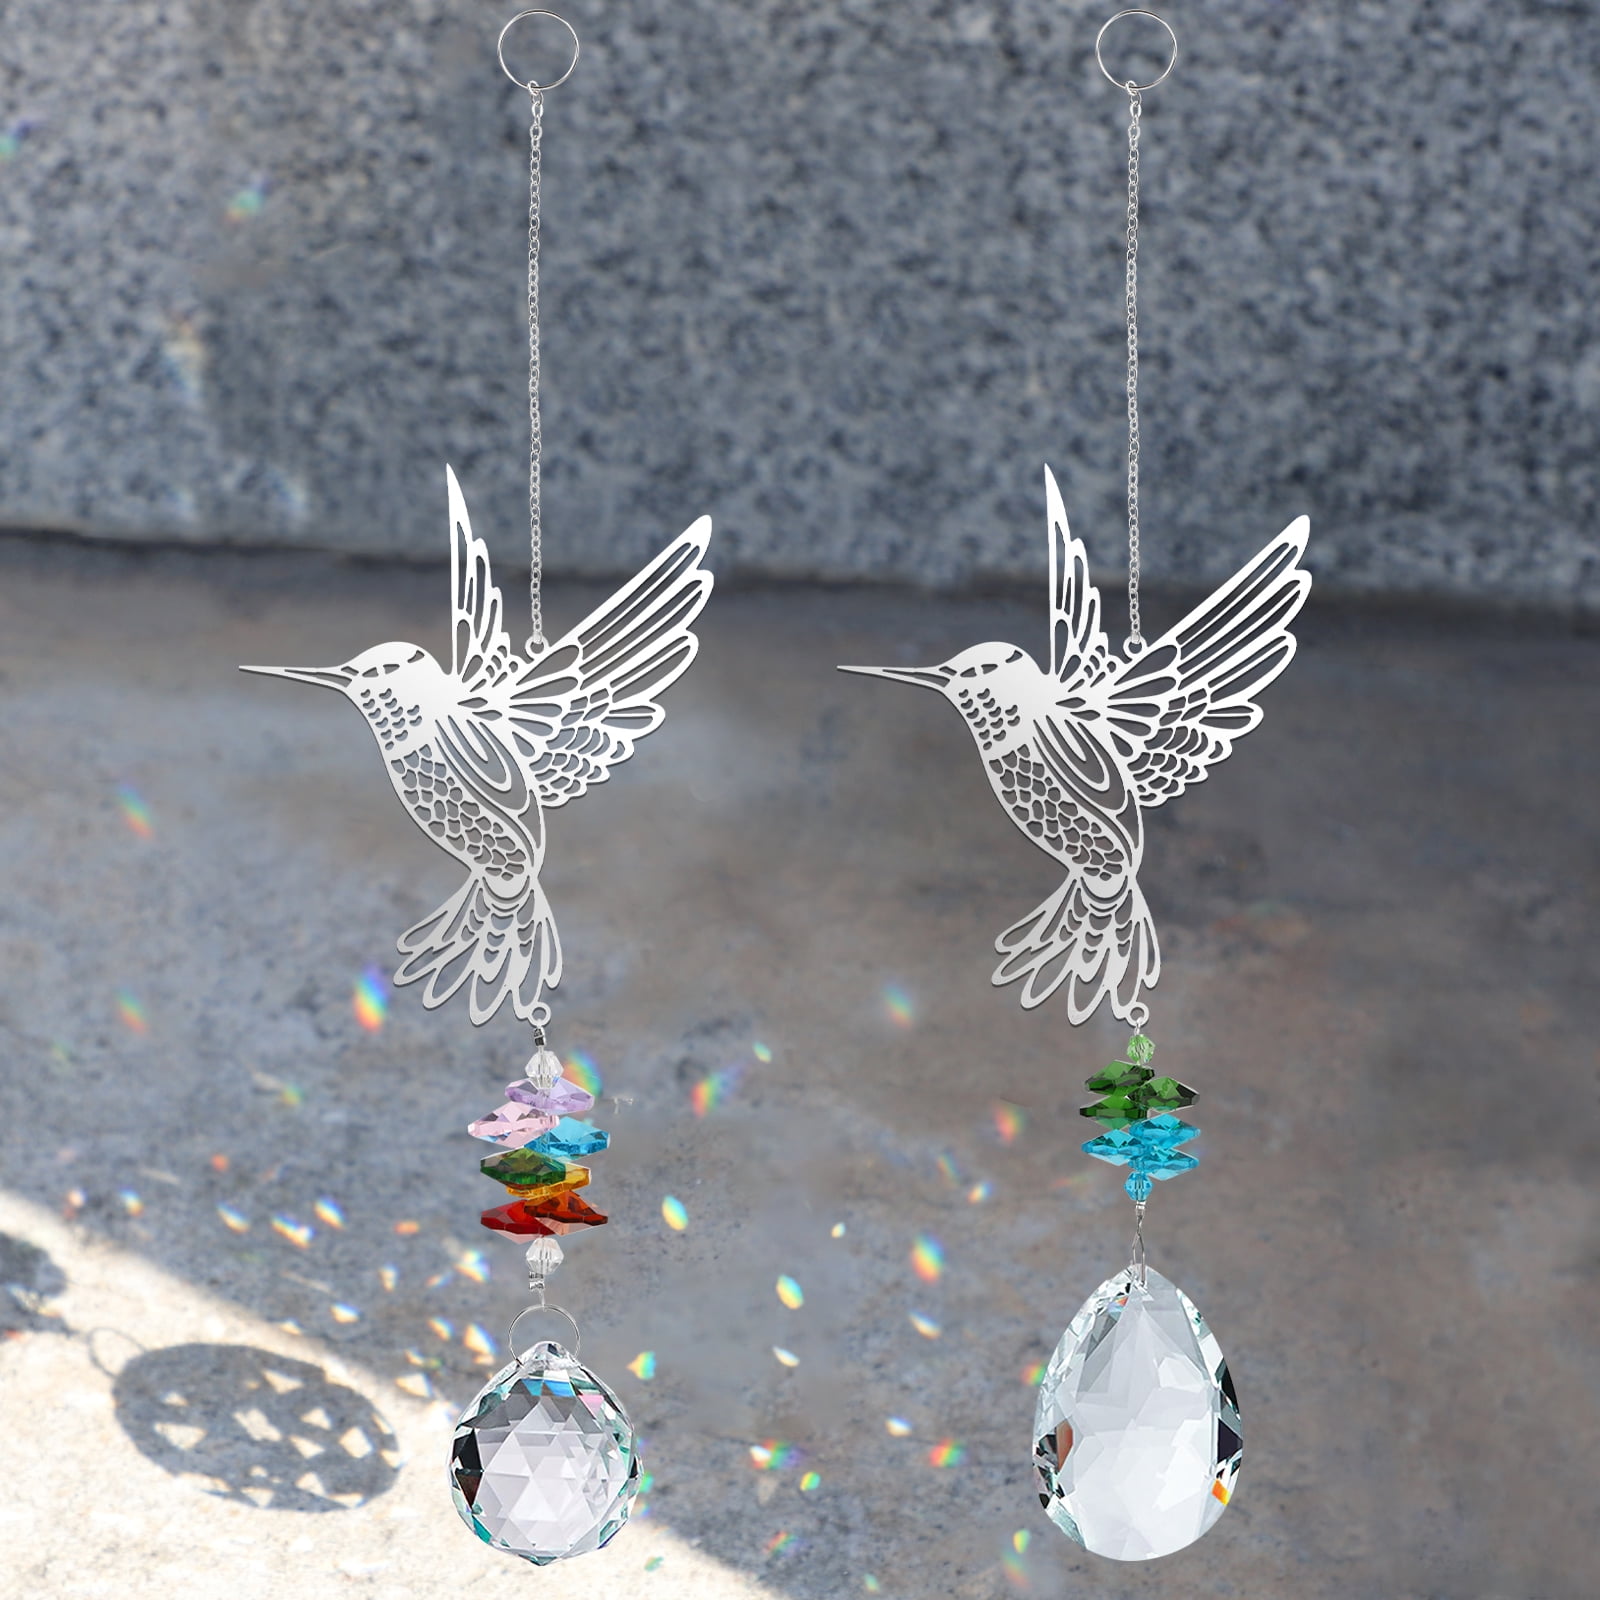 2pcs Crystals Ball Prisms Suncatcher Hanging Rainbow Maker Metal Chain Ornament 